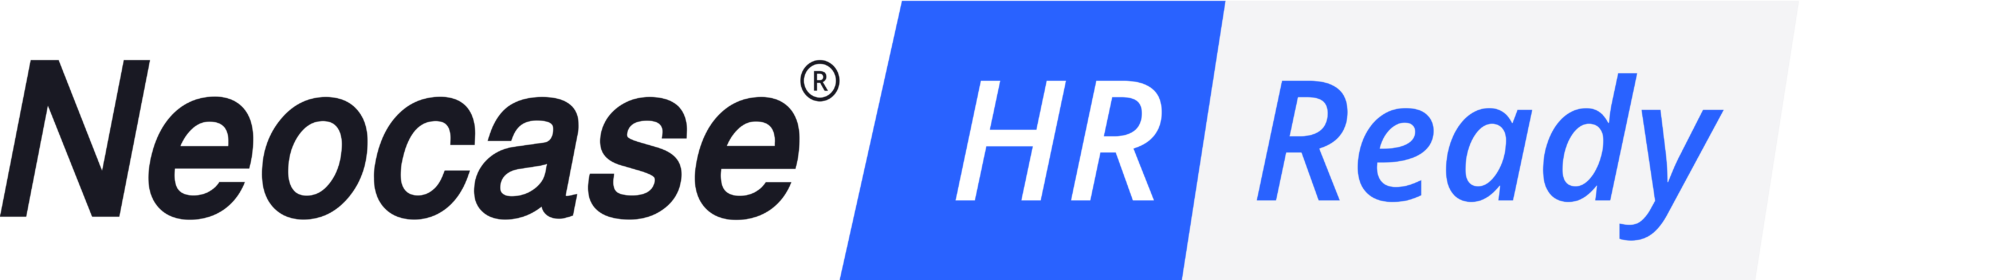 Neocase-logo-HR Ready